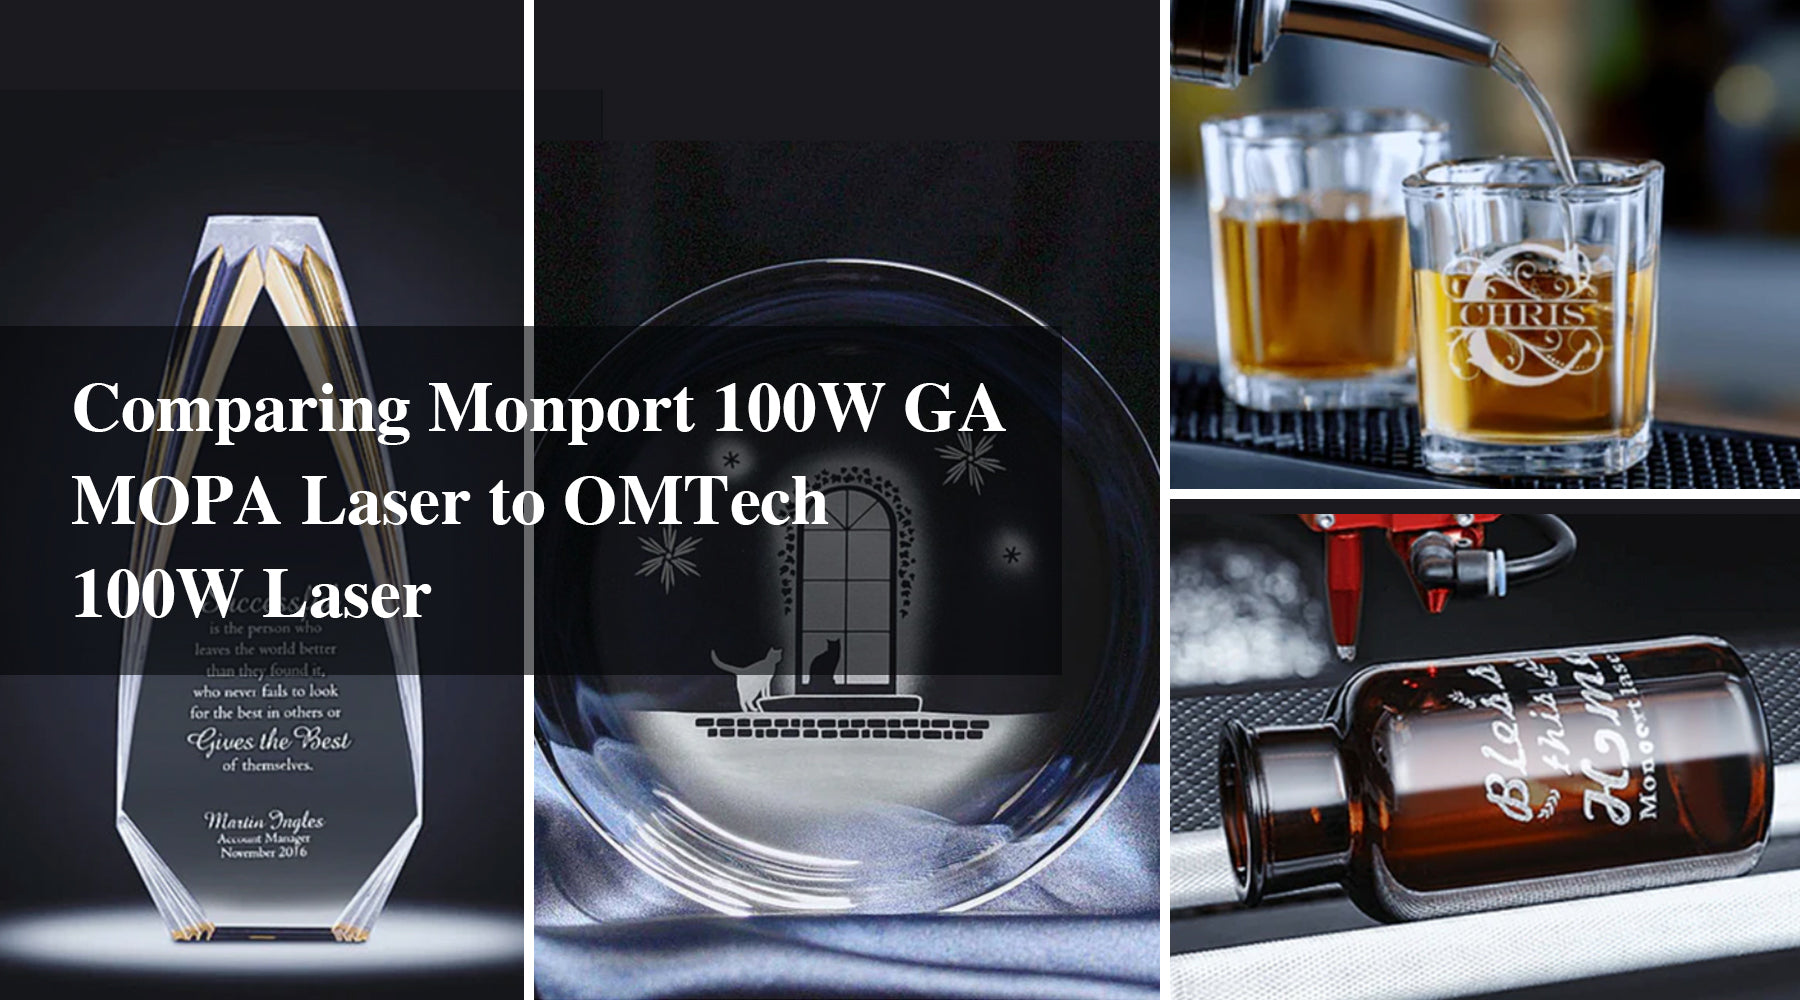 Comparing Monport 100W GA MOPA Laser to OMTech 100W Laser